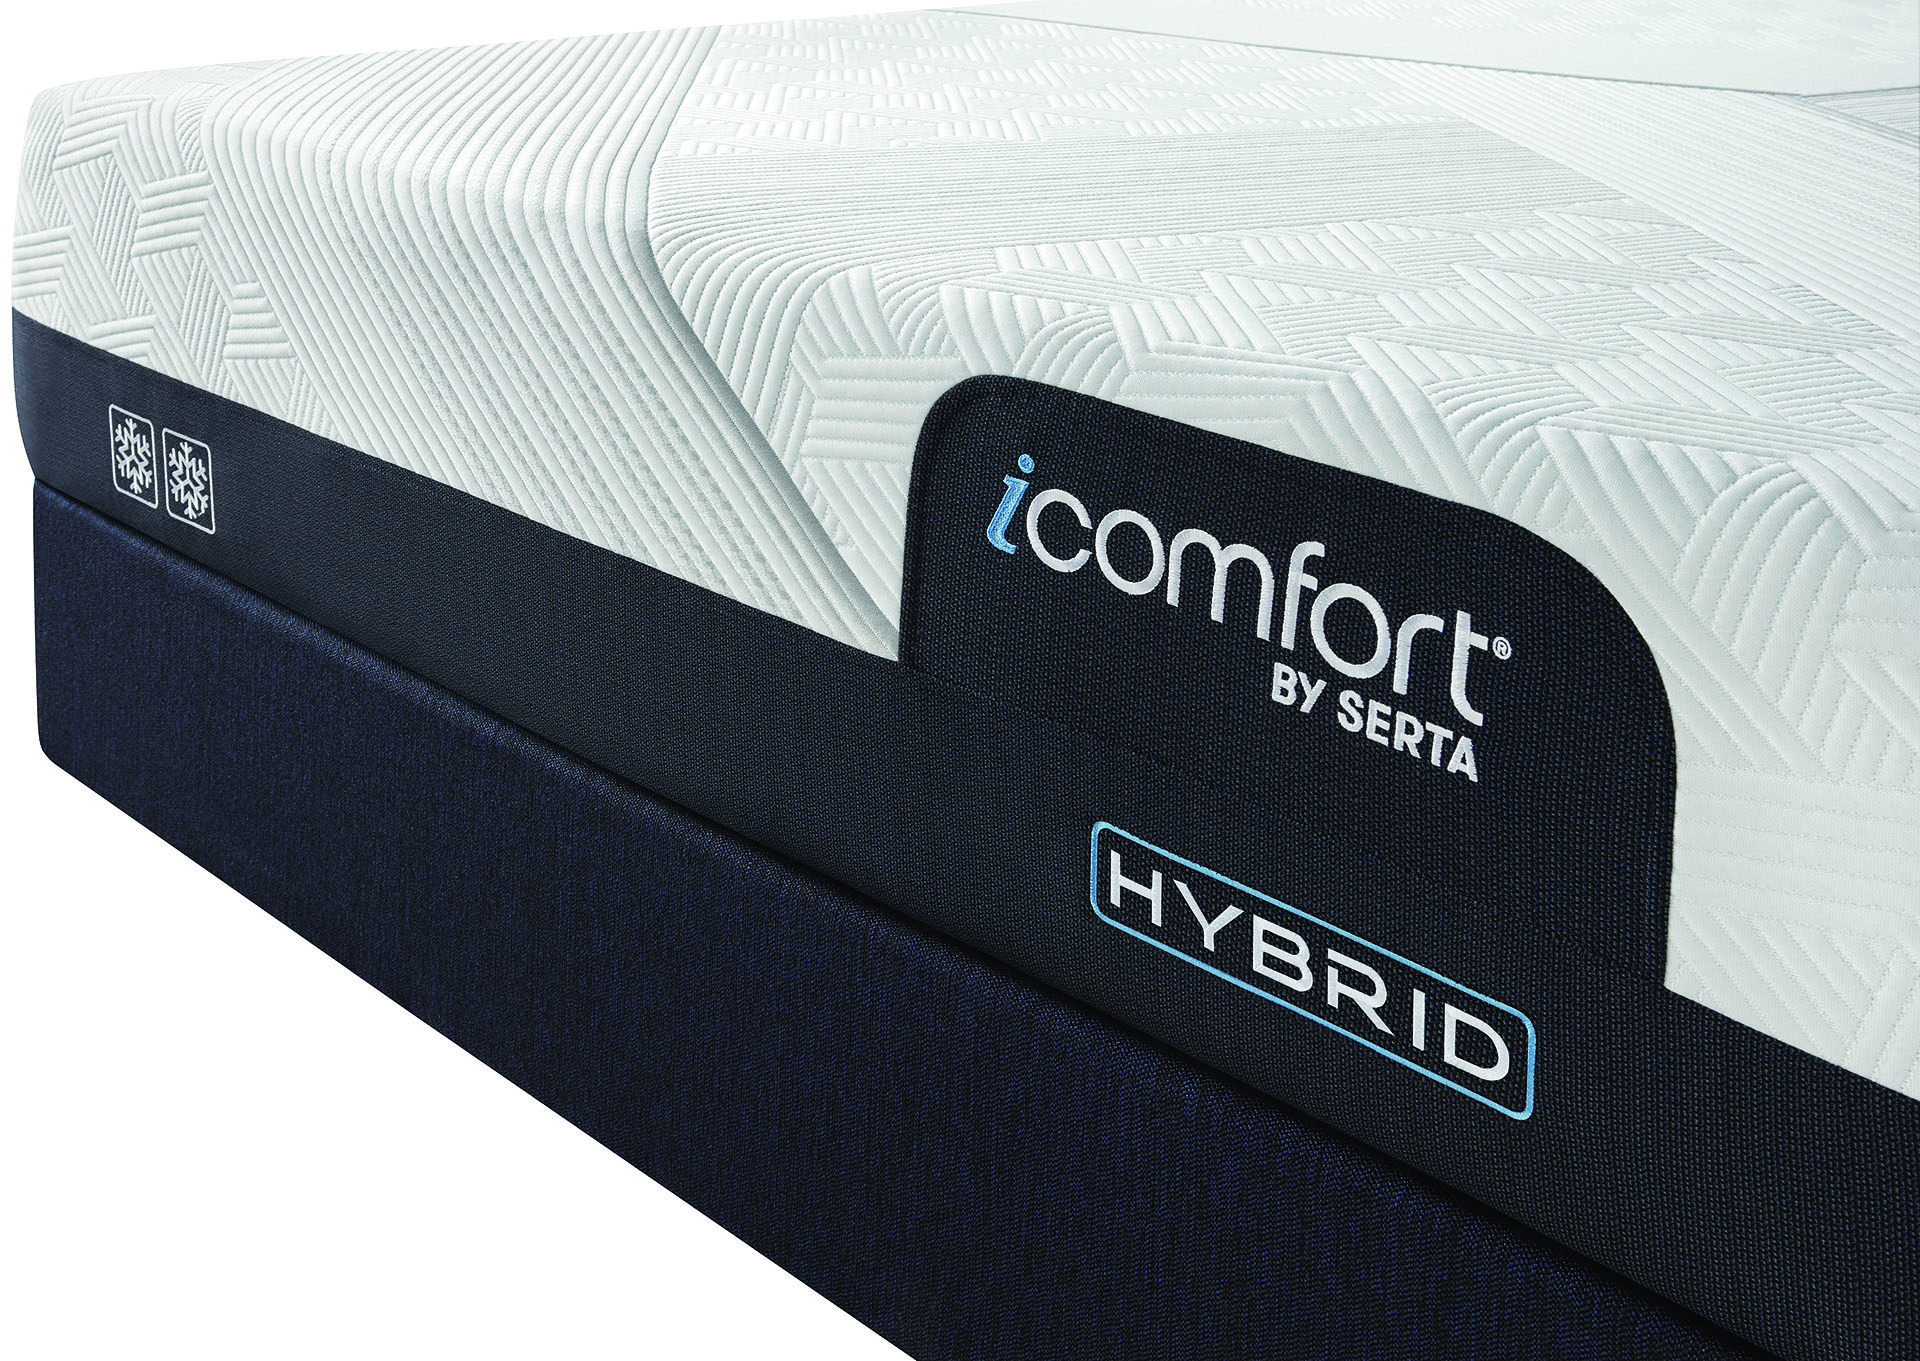 iComfort Hybrid Firm CF2000 Full Mattress,Serta Mattresses